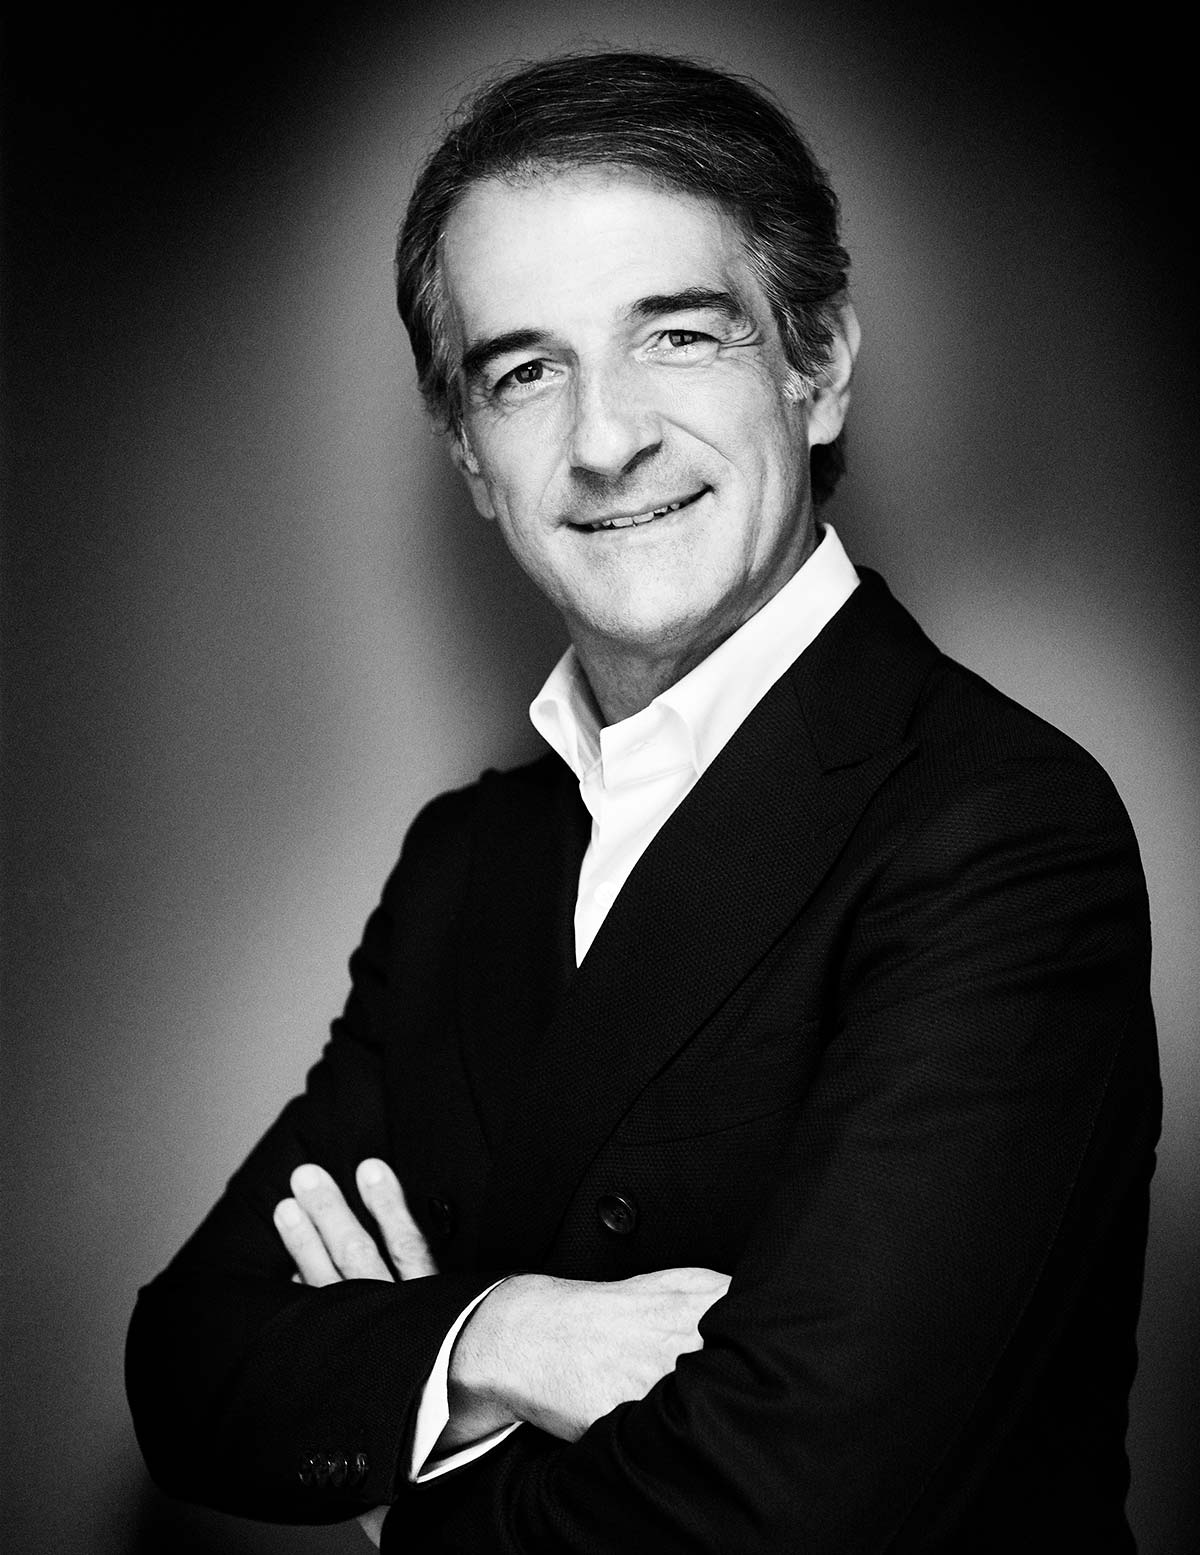 Claudio Feltrin, President of Federlegnoarredo